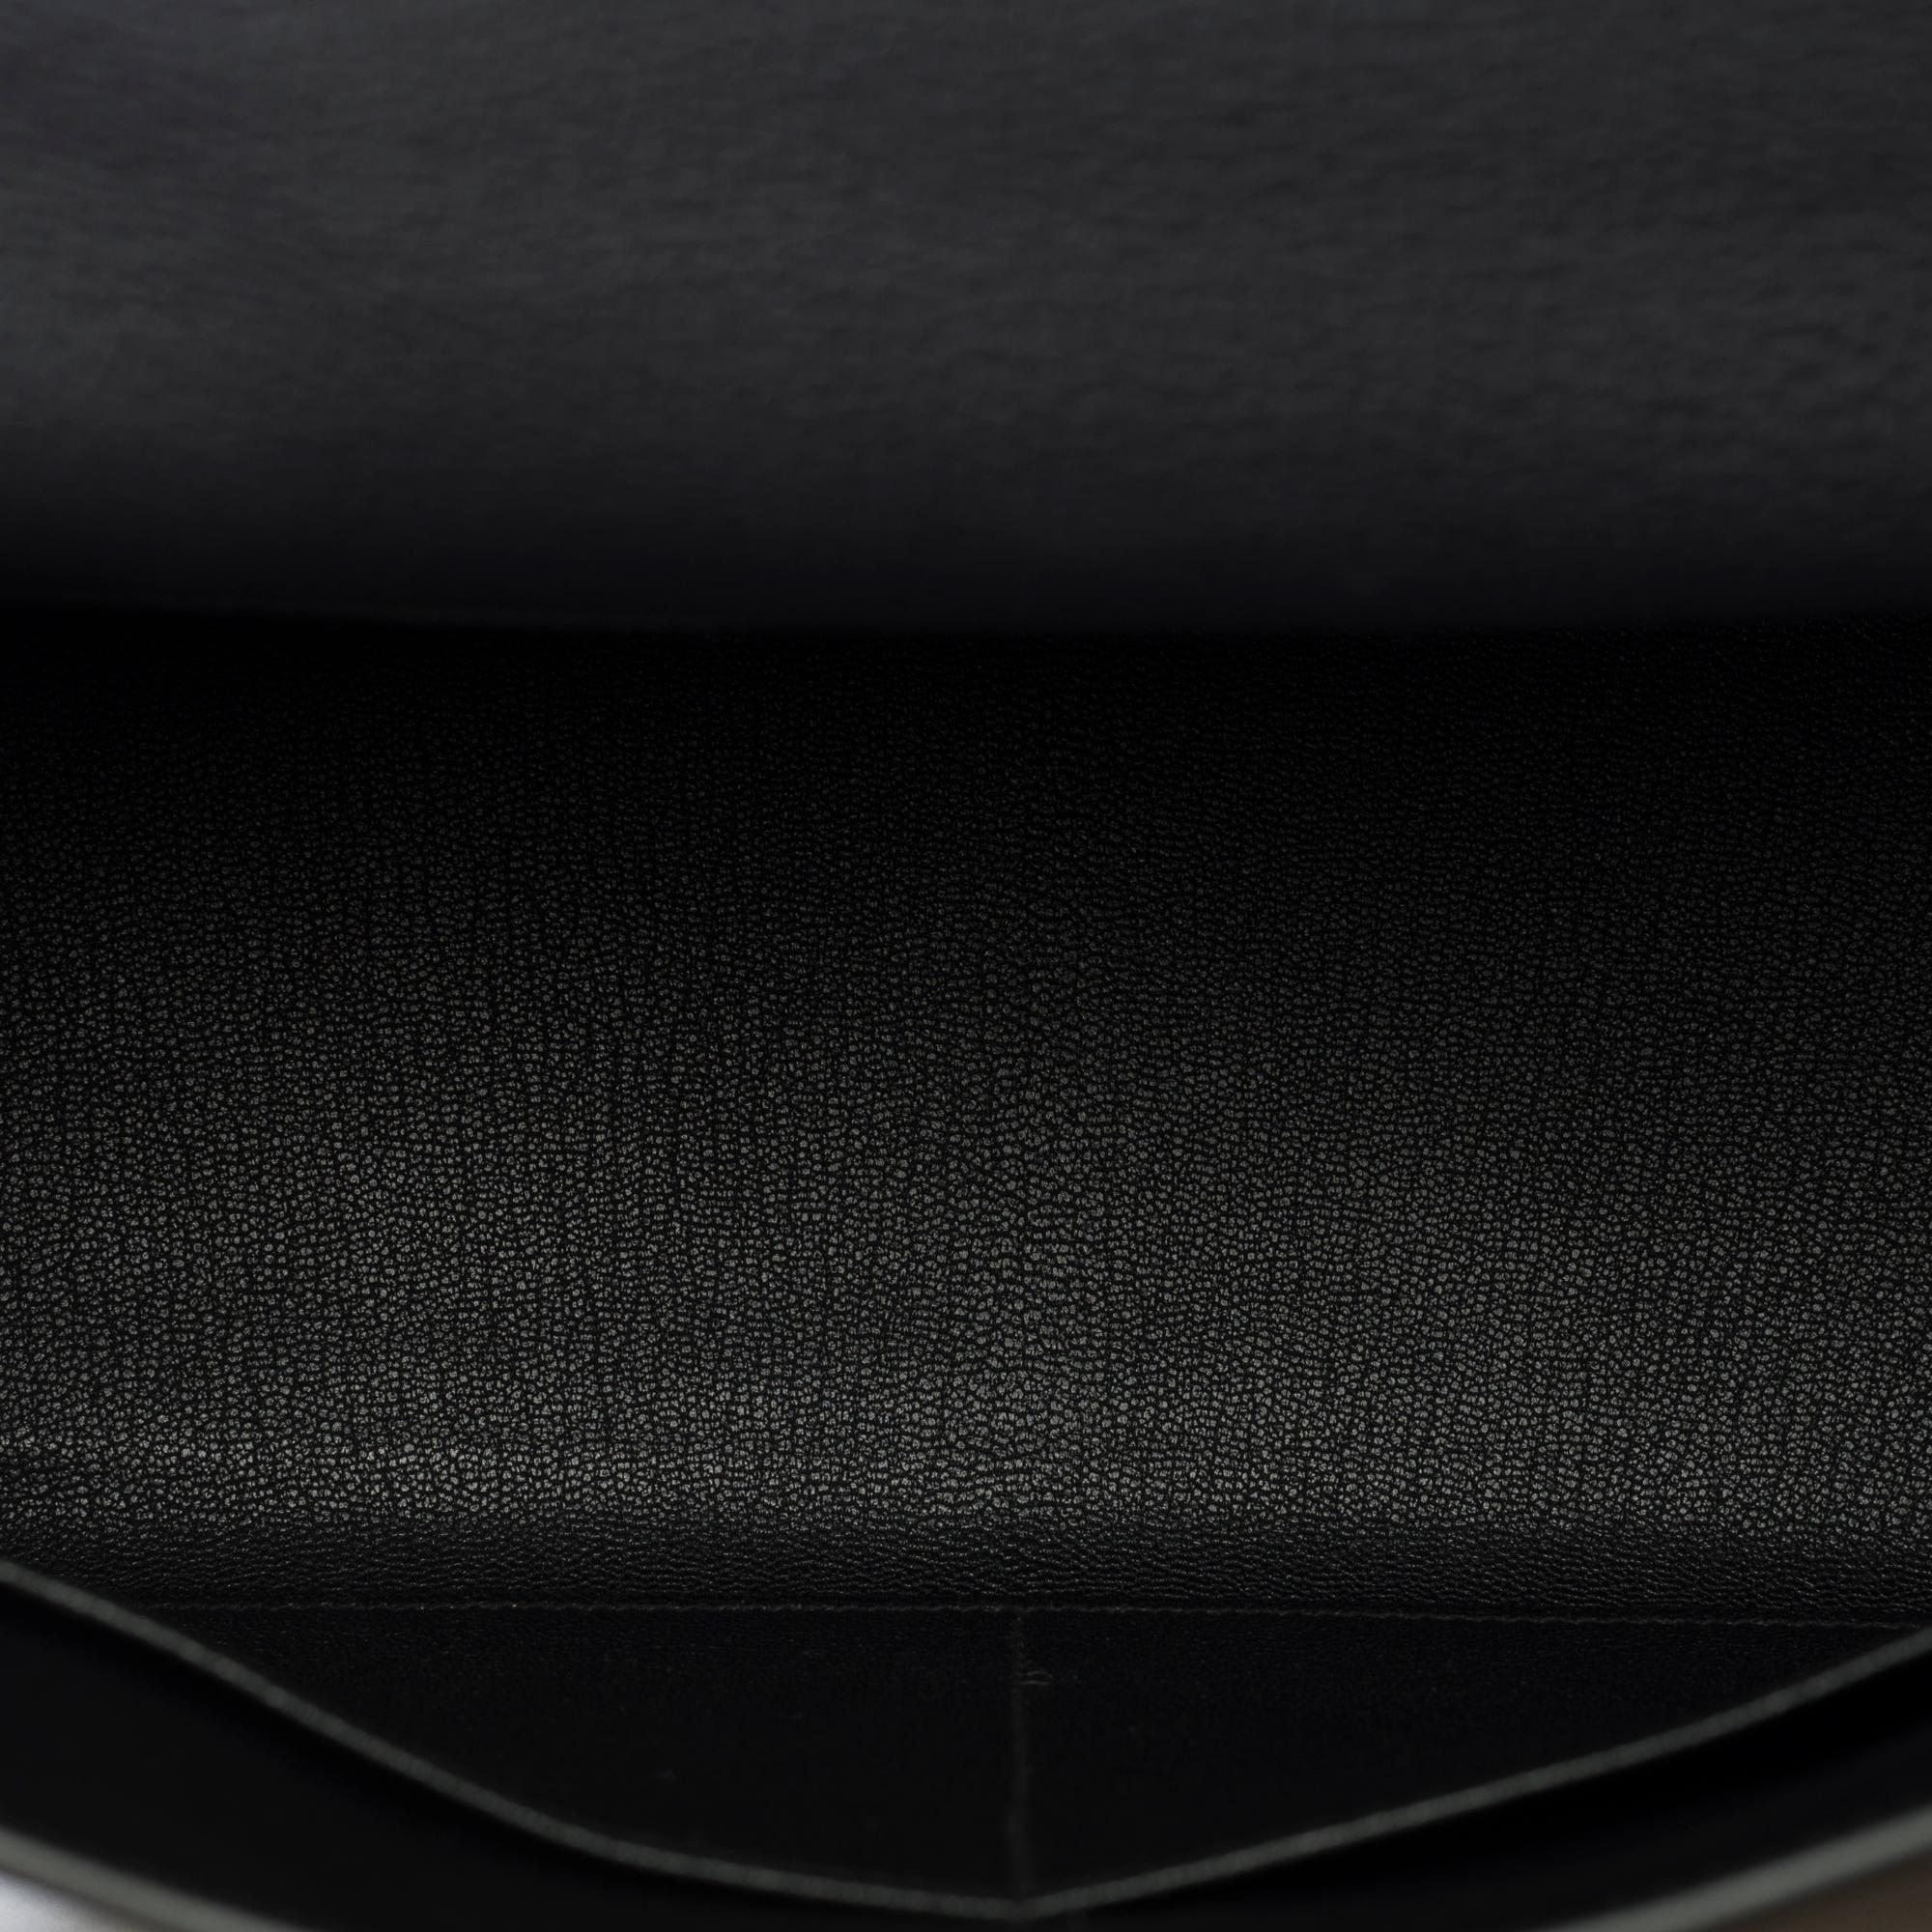 New Hermès Kelly 32 retourne handbag strap in Black Togo leather, GHW 5